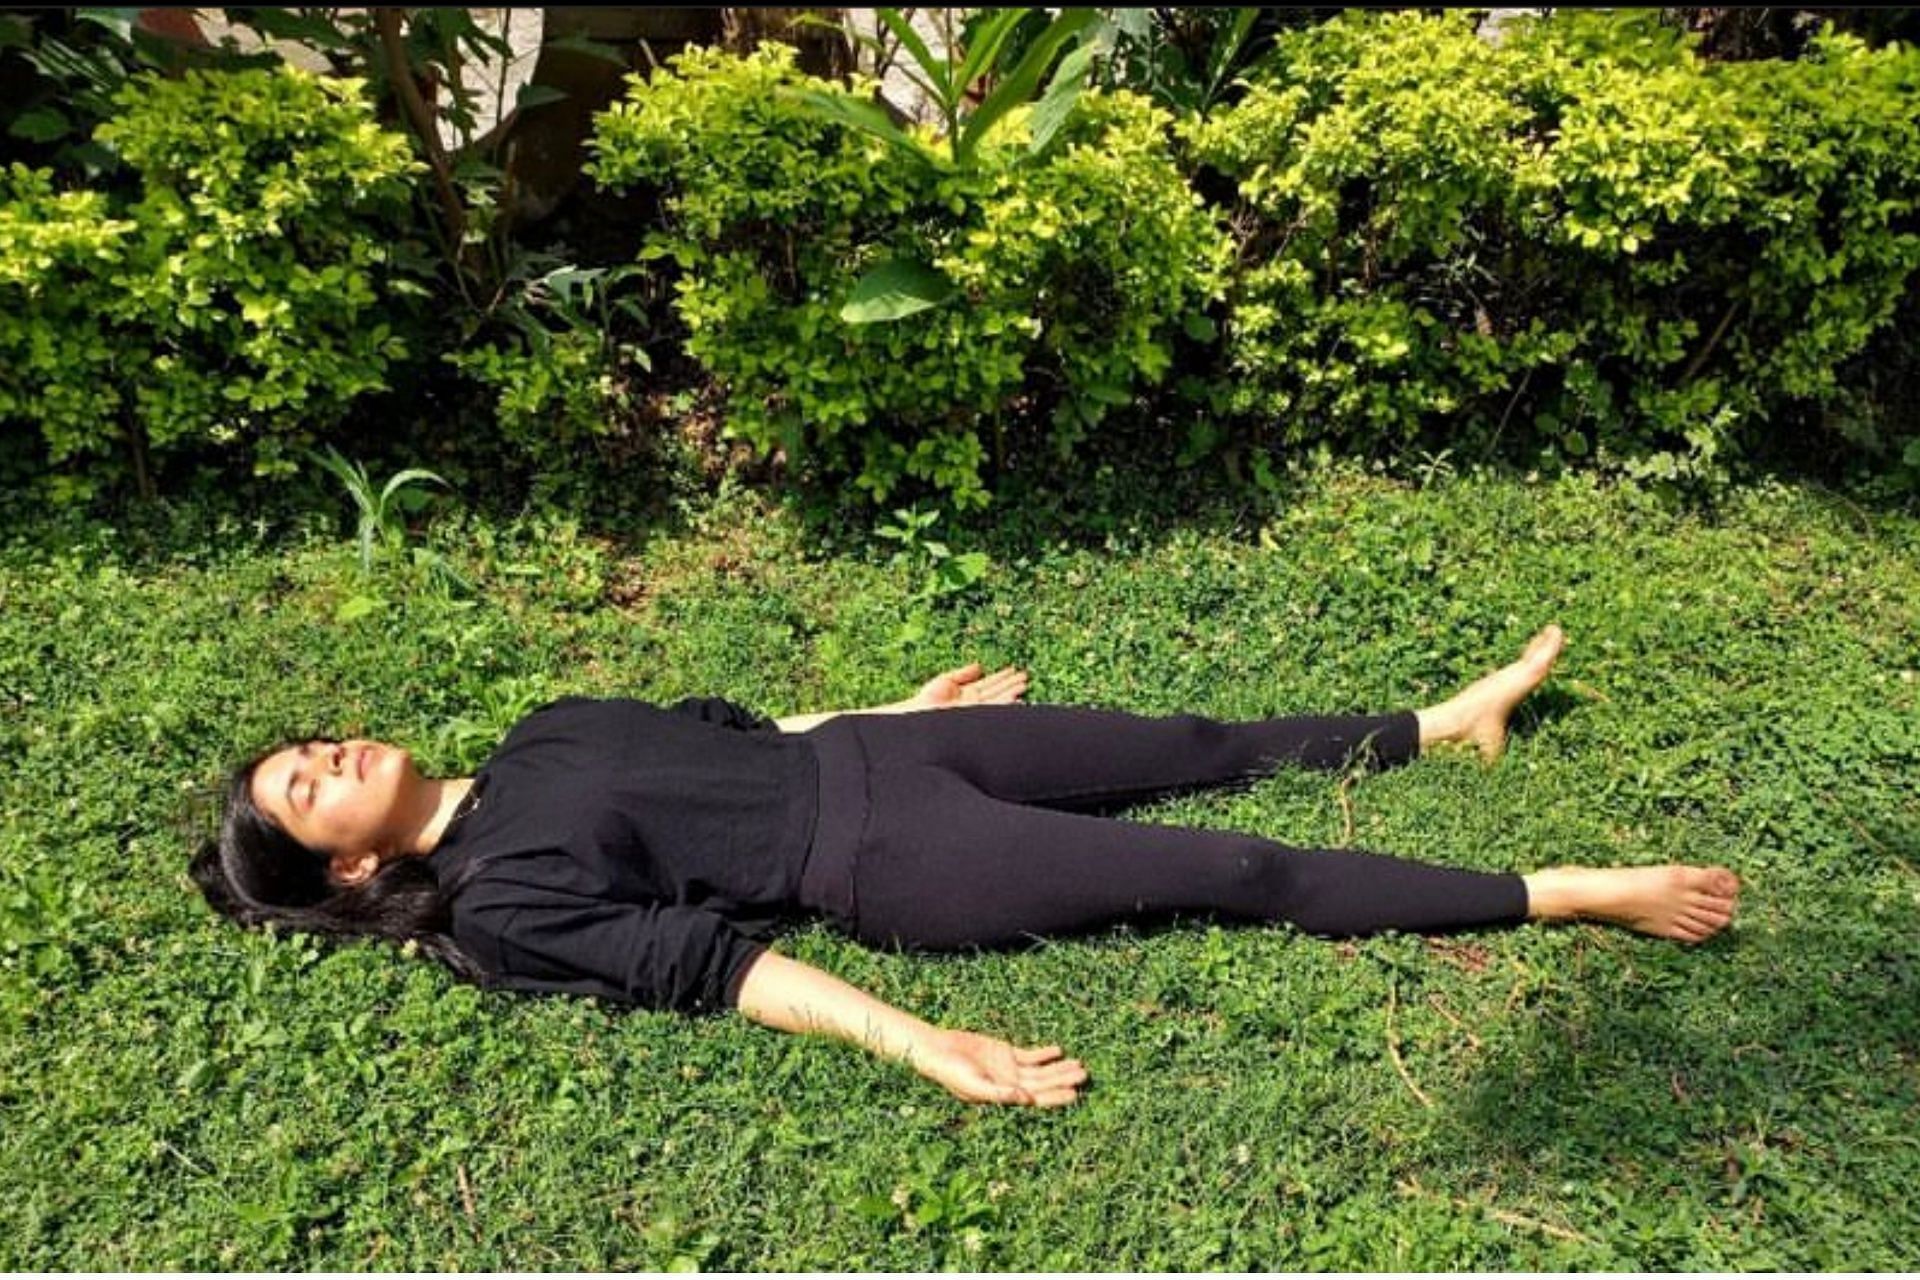 The corpse pose relaxes the nerves. (Photo via Instagram/_shova_)